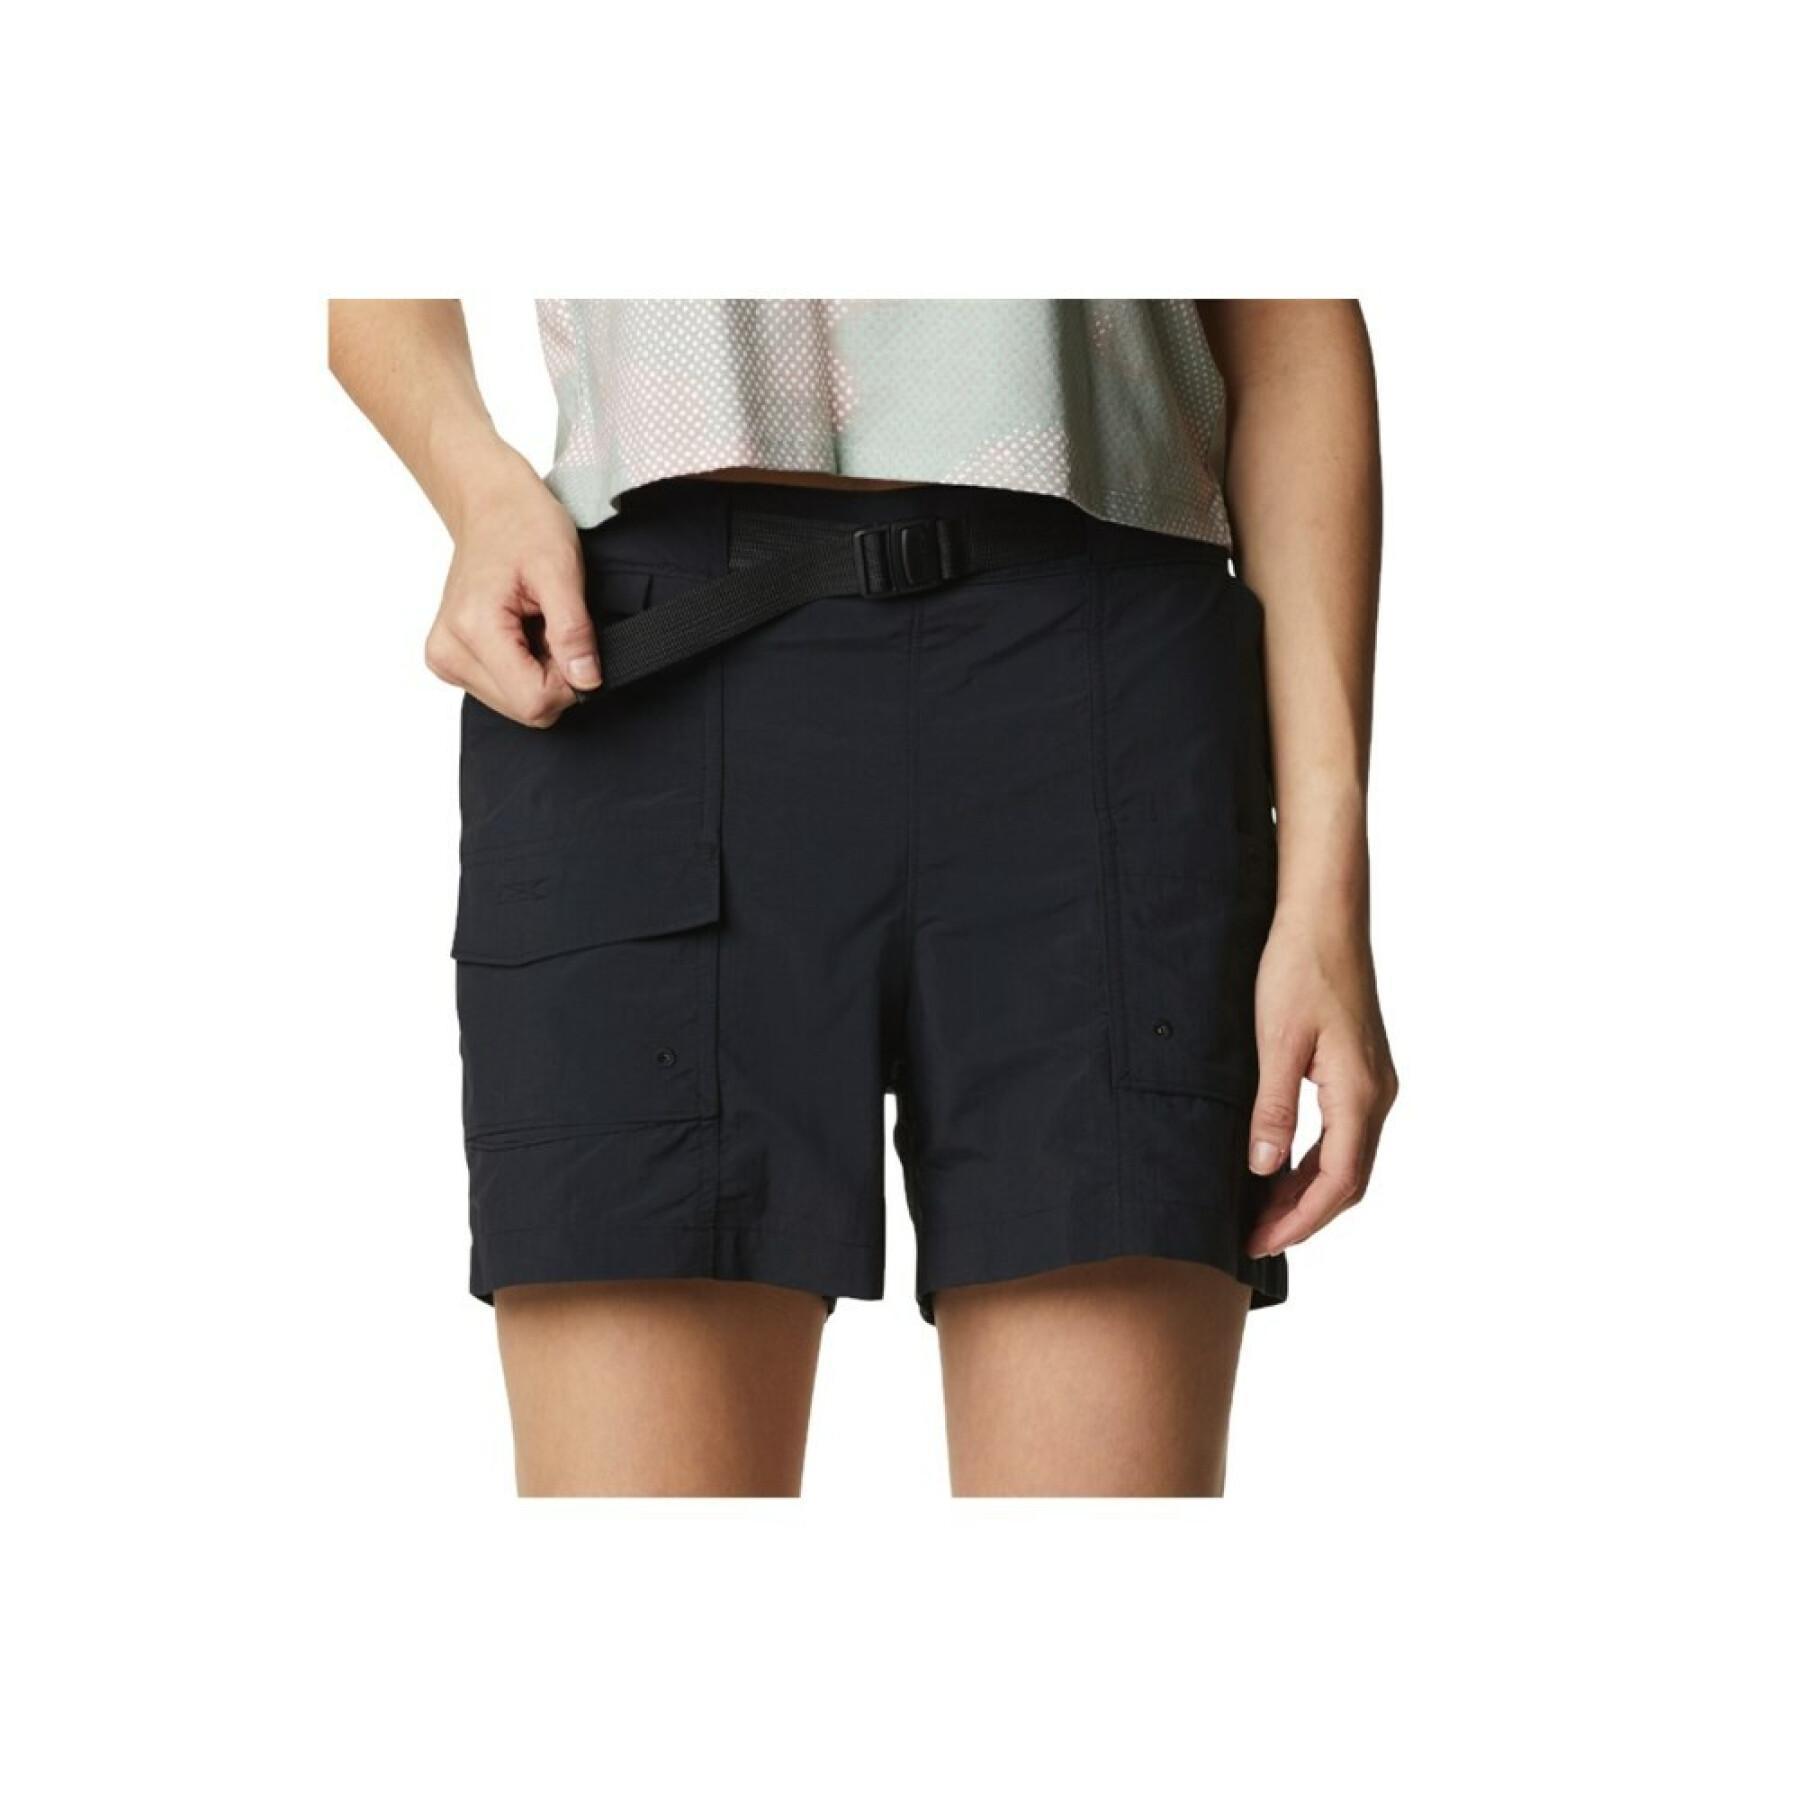 Women's shorts Columbia Summerdry Cargo